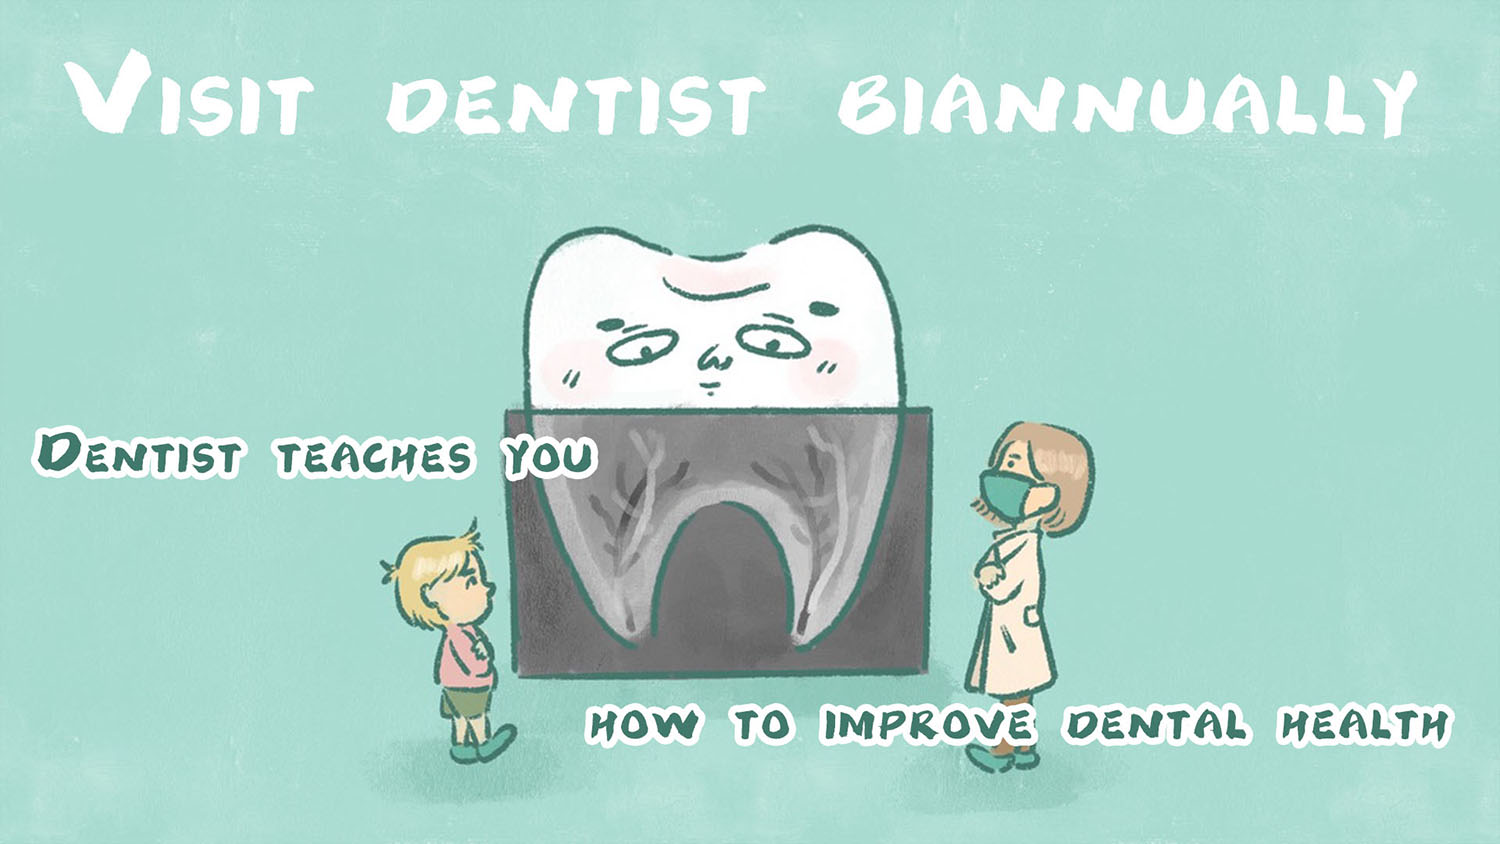 Visit Dentist Biannually